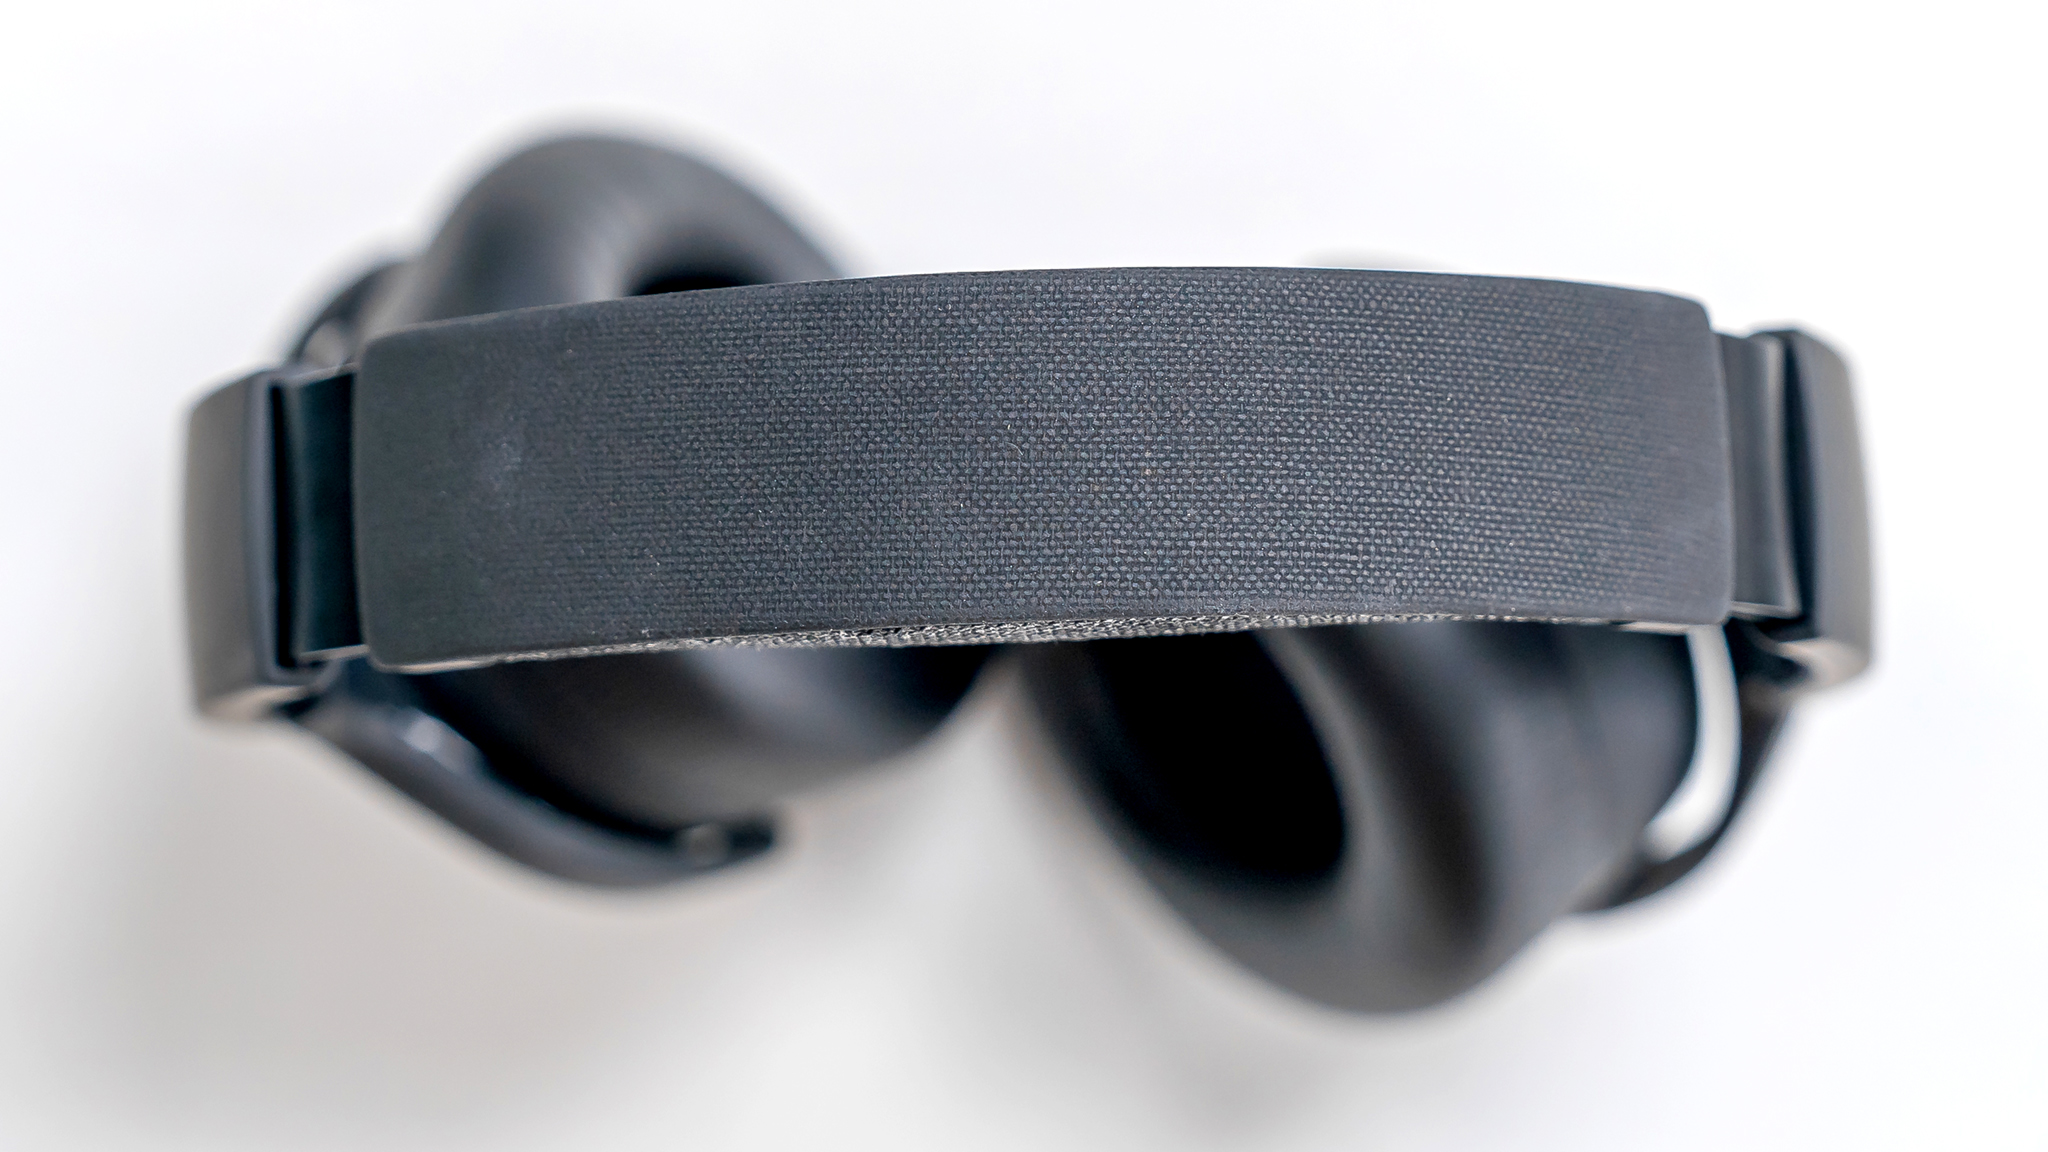 Top view of the headband on the Skullcandy Crusher ANC 2 headphones.